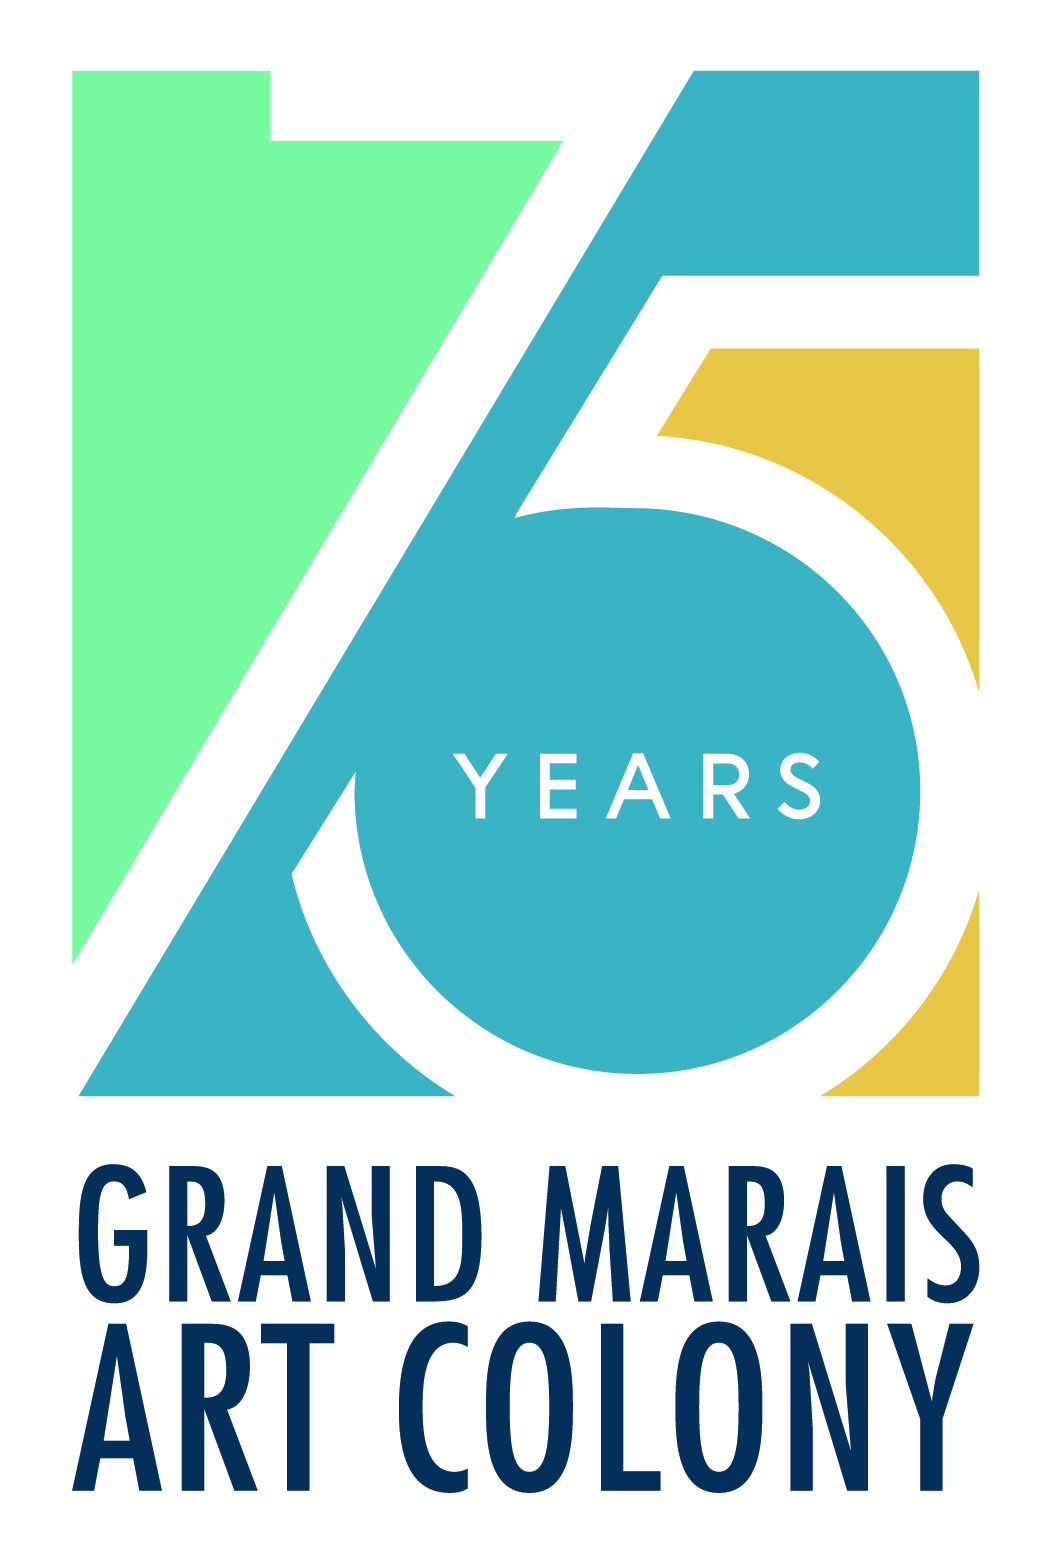 Grand Marais Art Colony 75th anniversary graphic, created by Šek Design Studio